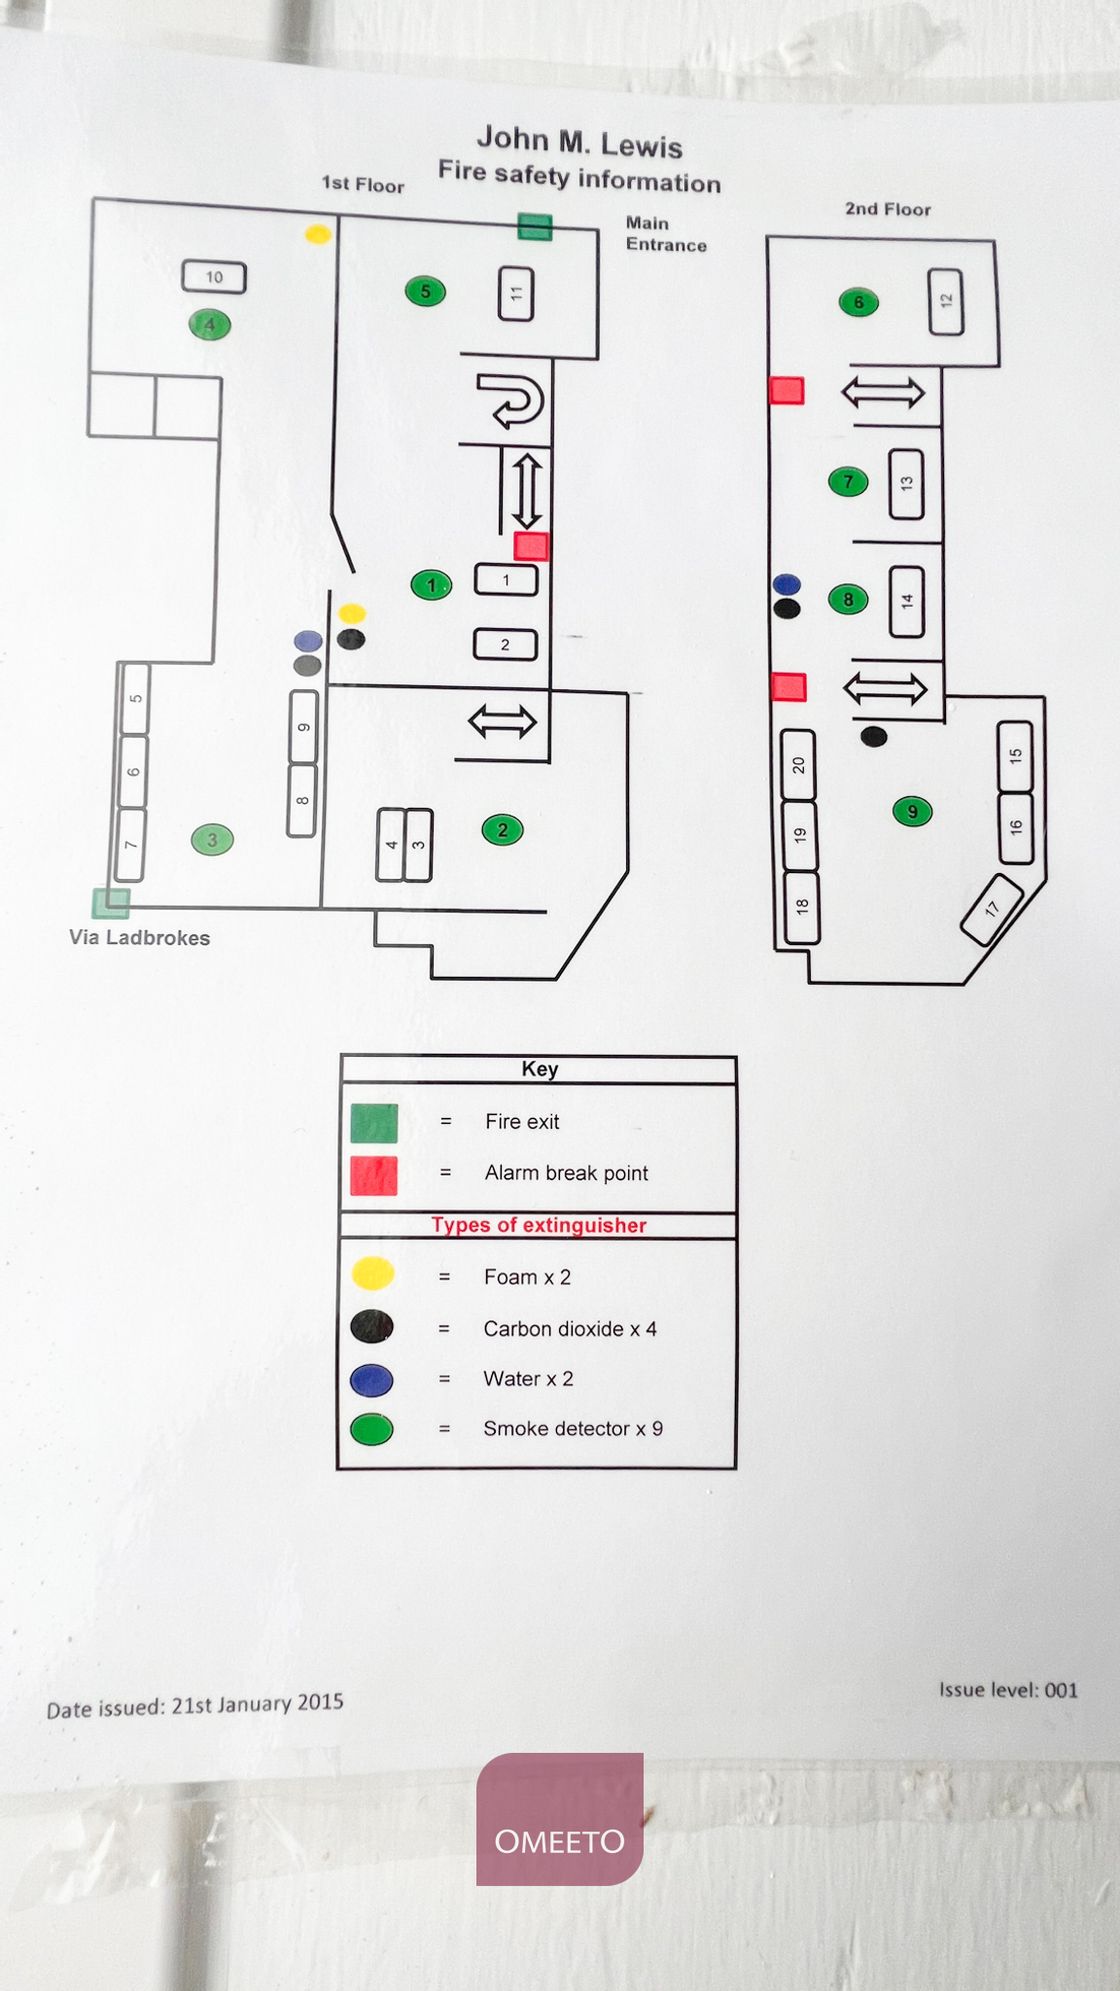 Property Floorplan 1